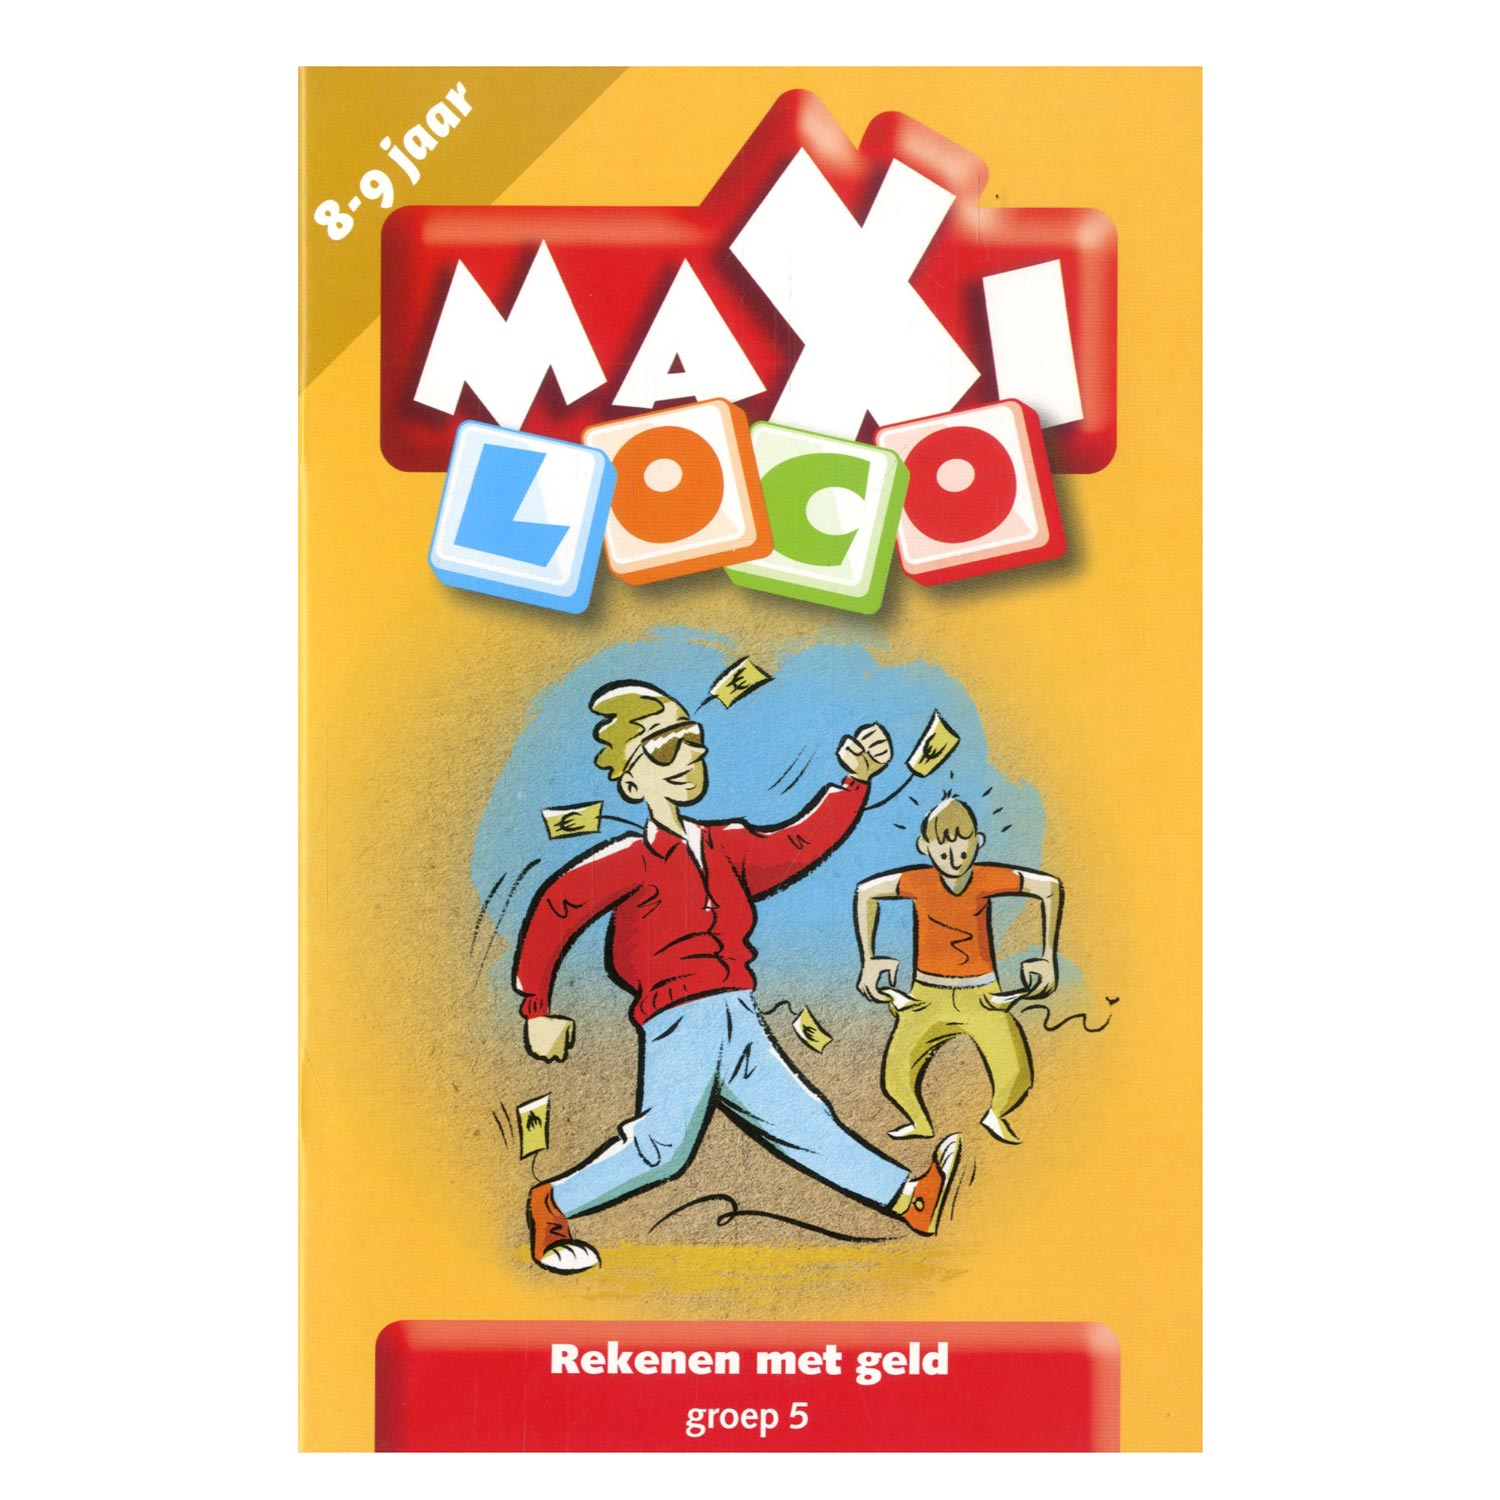 Maxi Loco - Rekenen met geld Groep 5 (8-9 jr.)